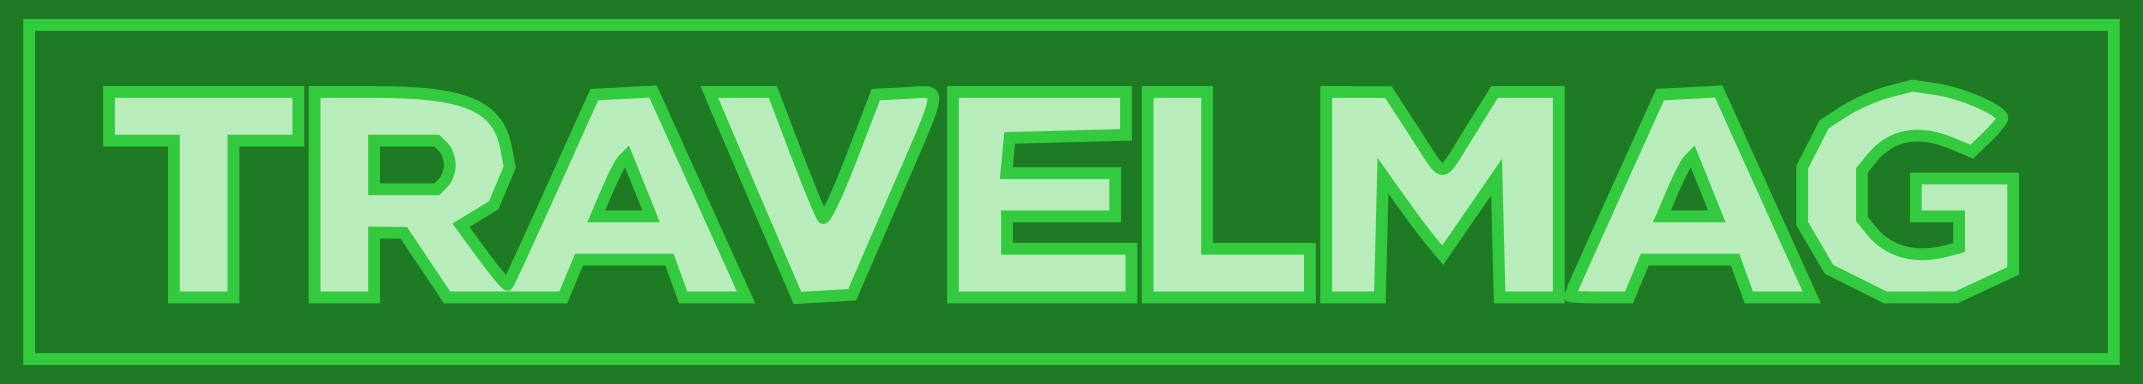 Travelmag logo/link